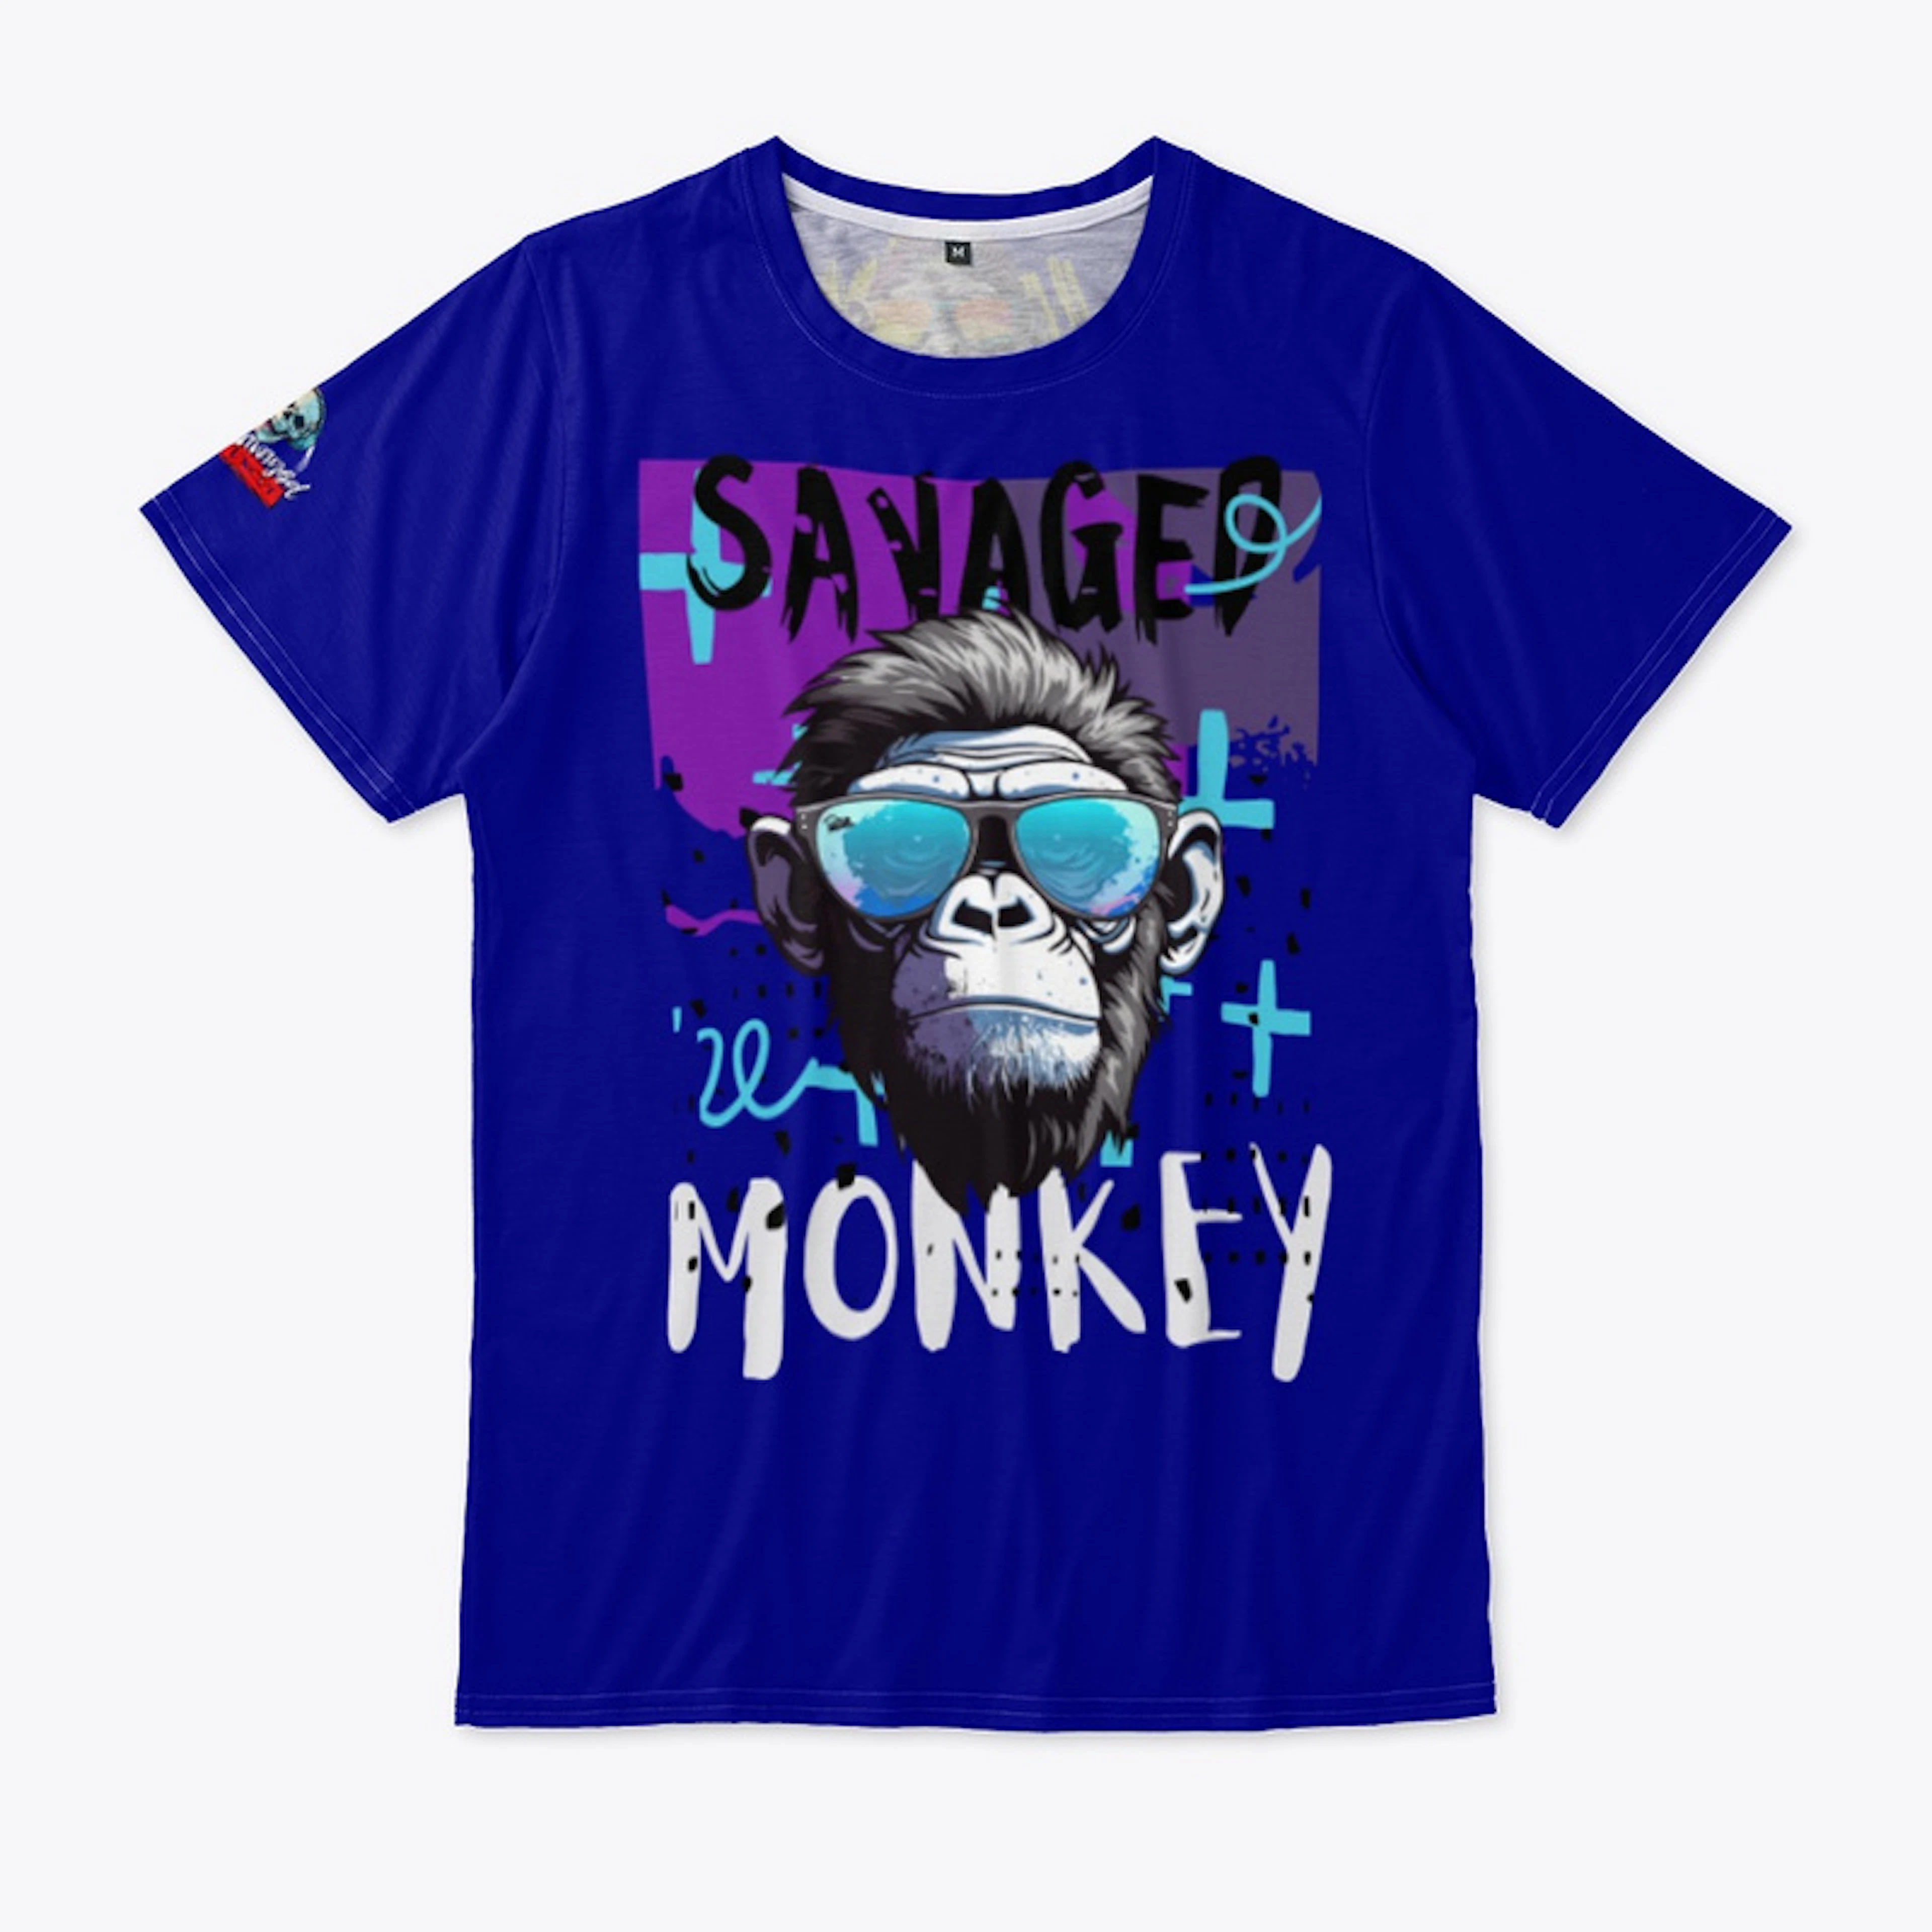 Savaged Monkey: No Monkey n' Around